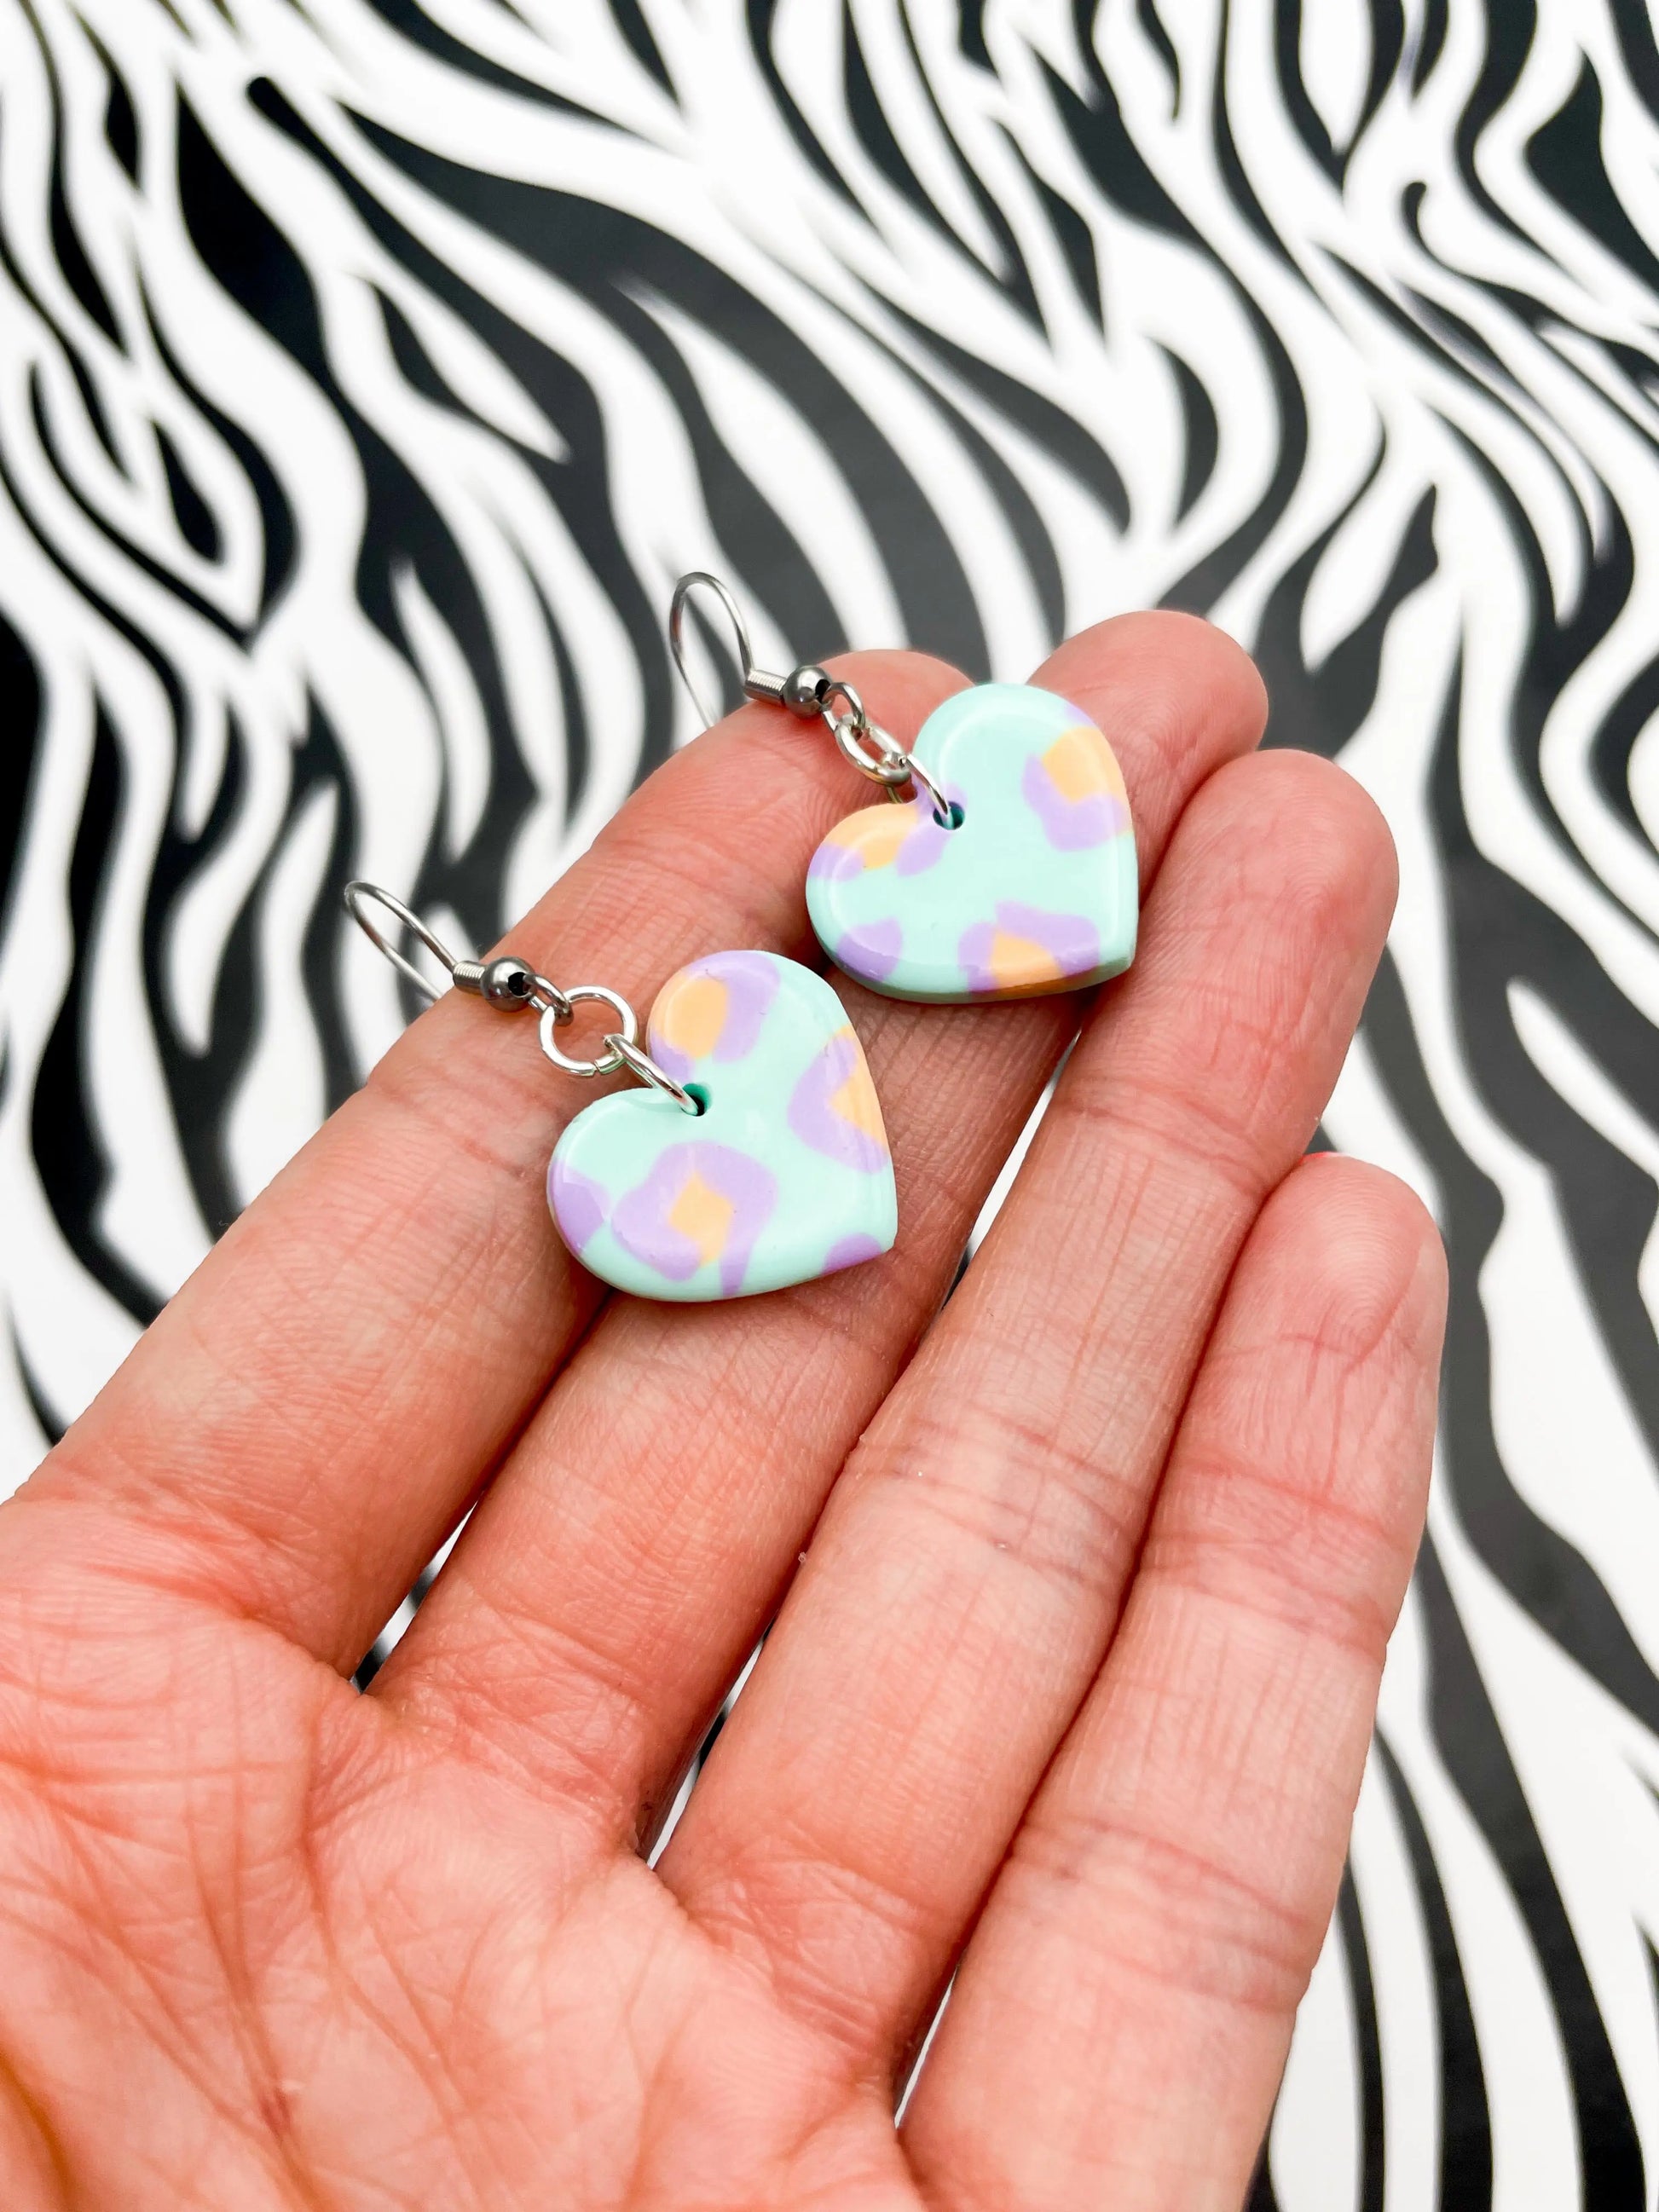 Medium Mint, Peach and Lilac Leopard Print Heart Stud Earrings from Sapphire Frills